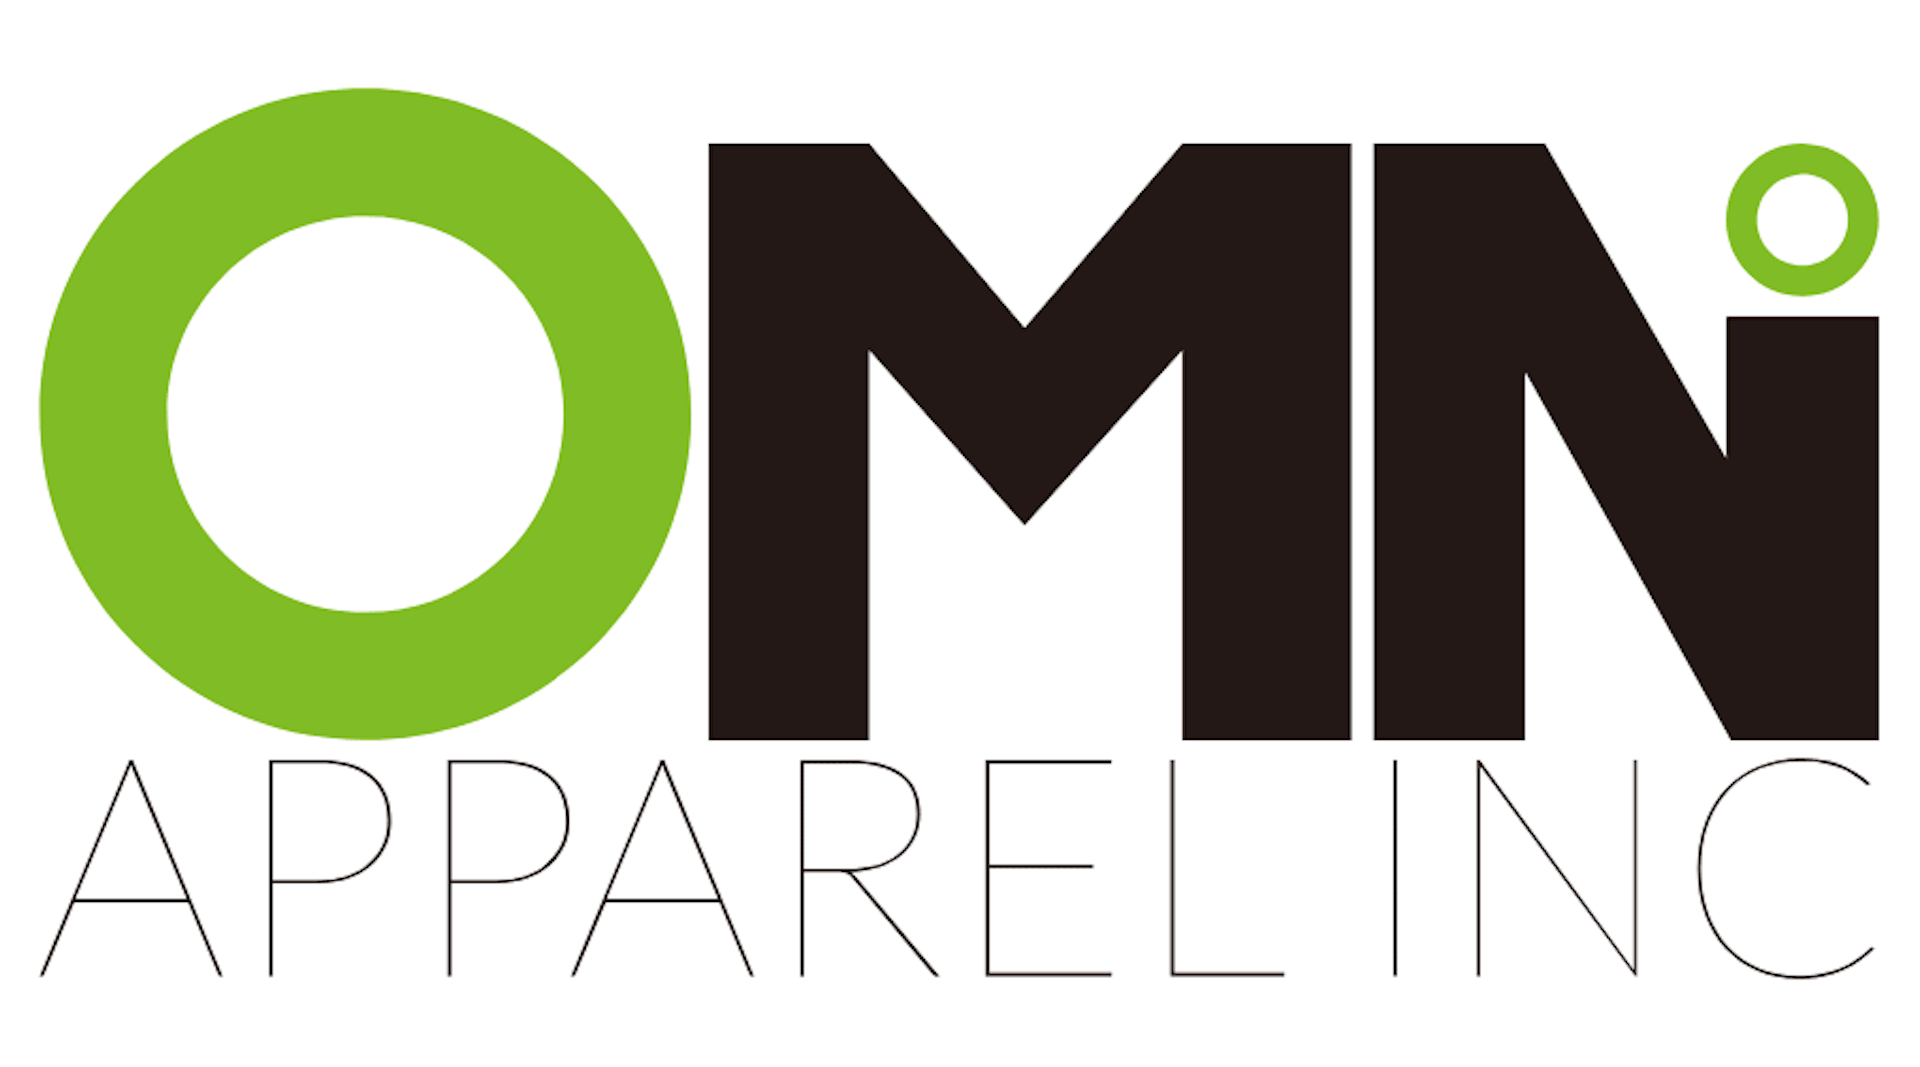 Omni Apparel Inc